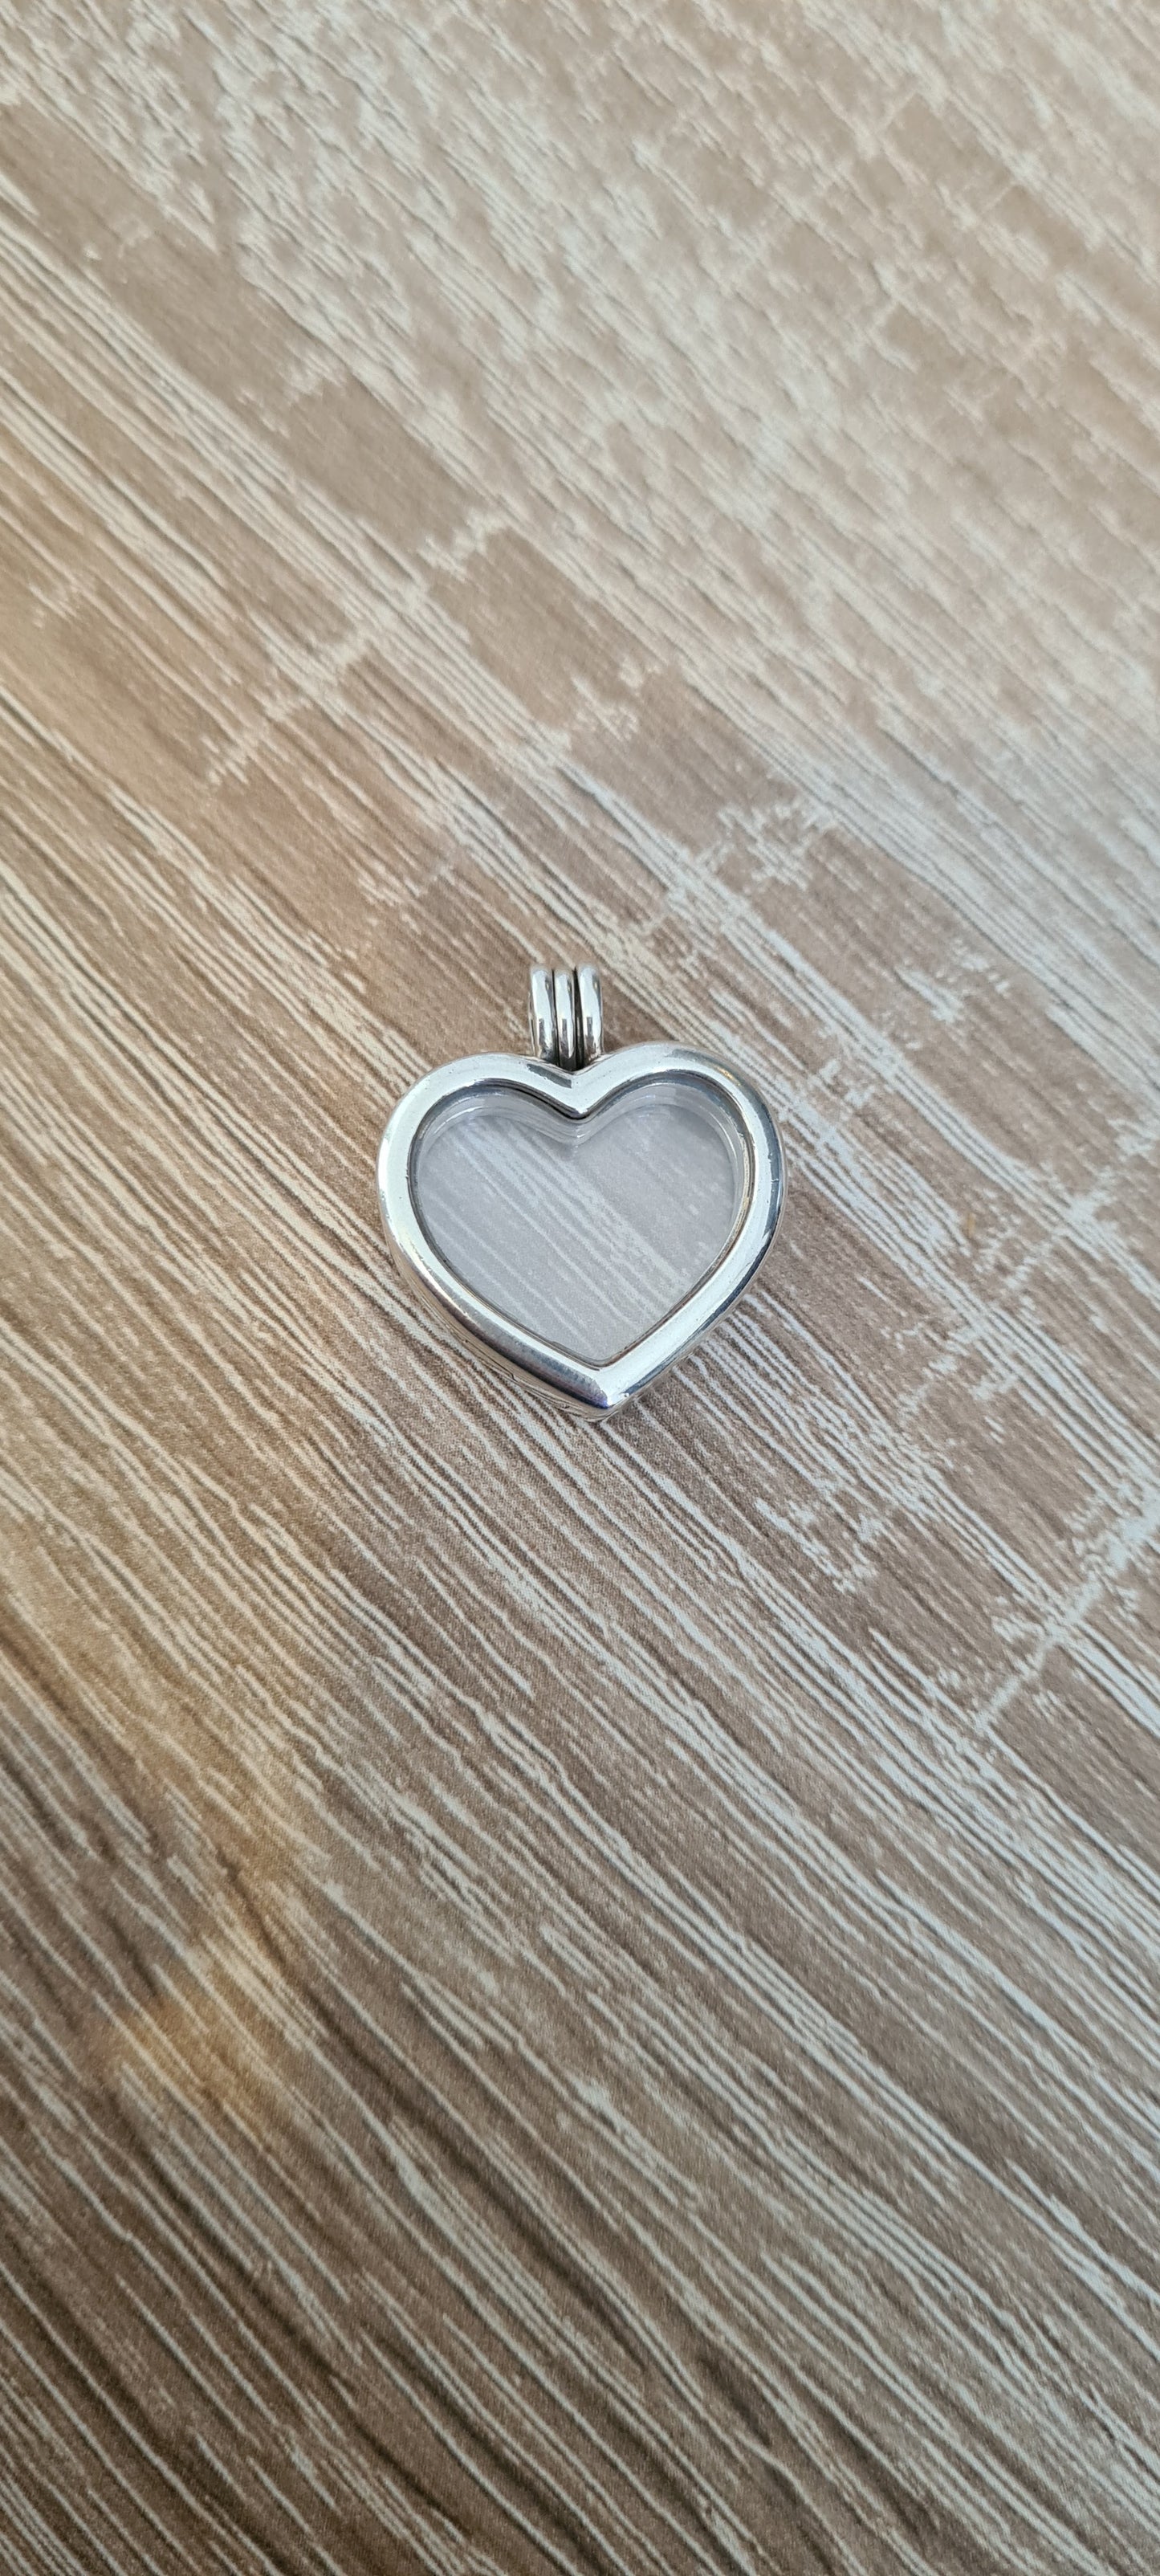 Genuine Pandora Heart Shaped Memory Locket Petite Pendant With 60cm Chain